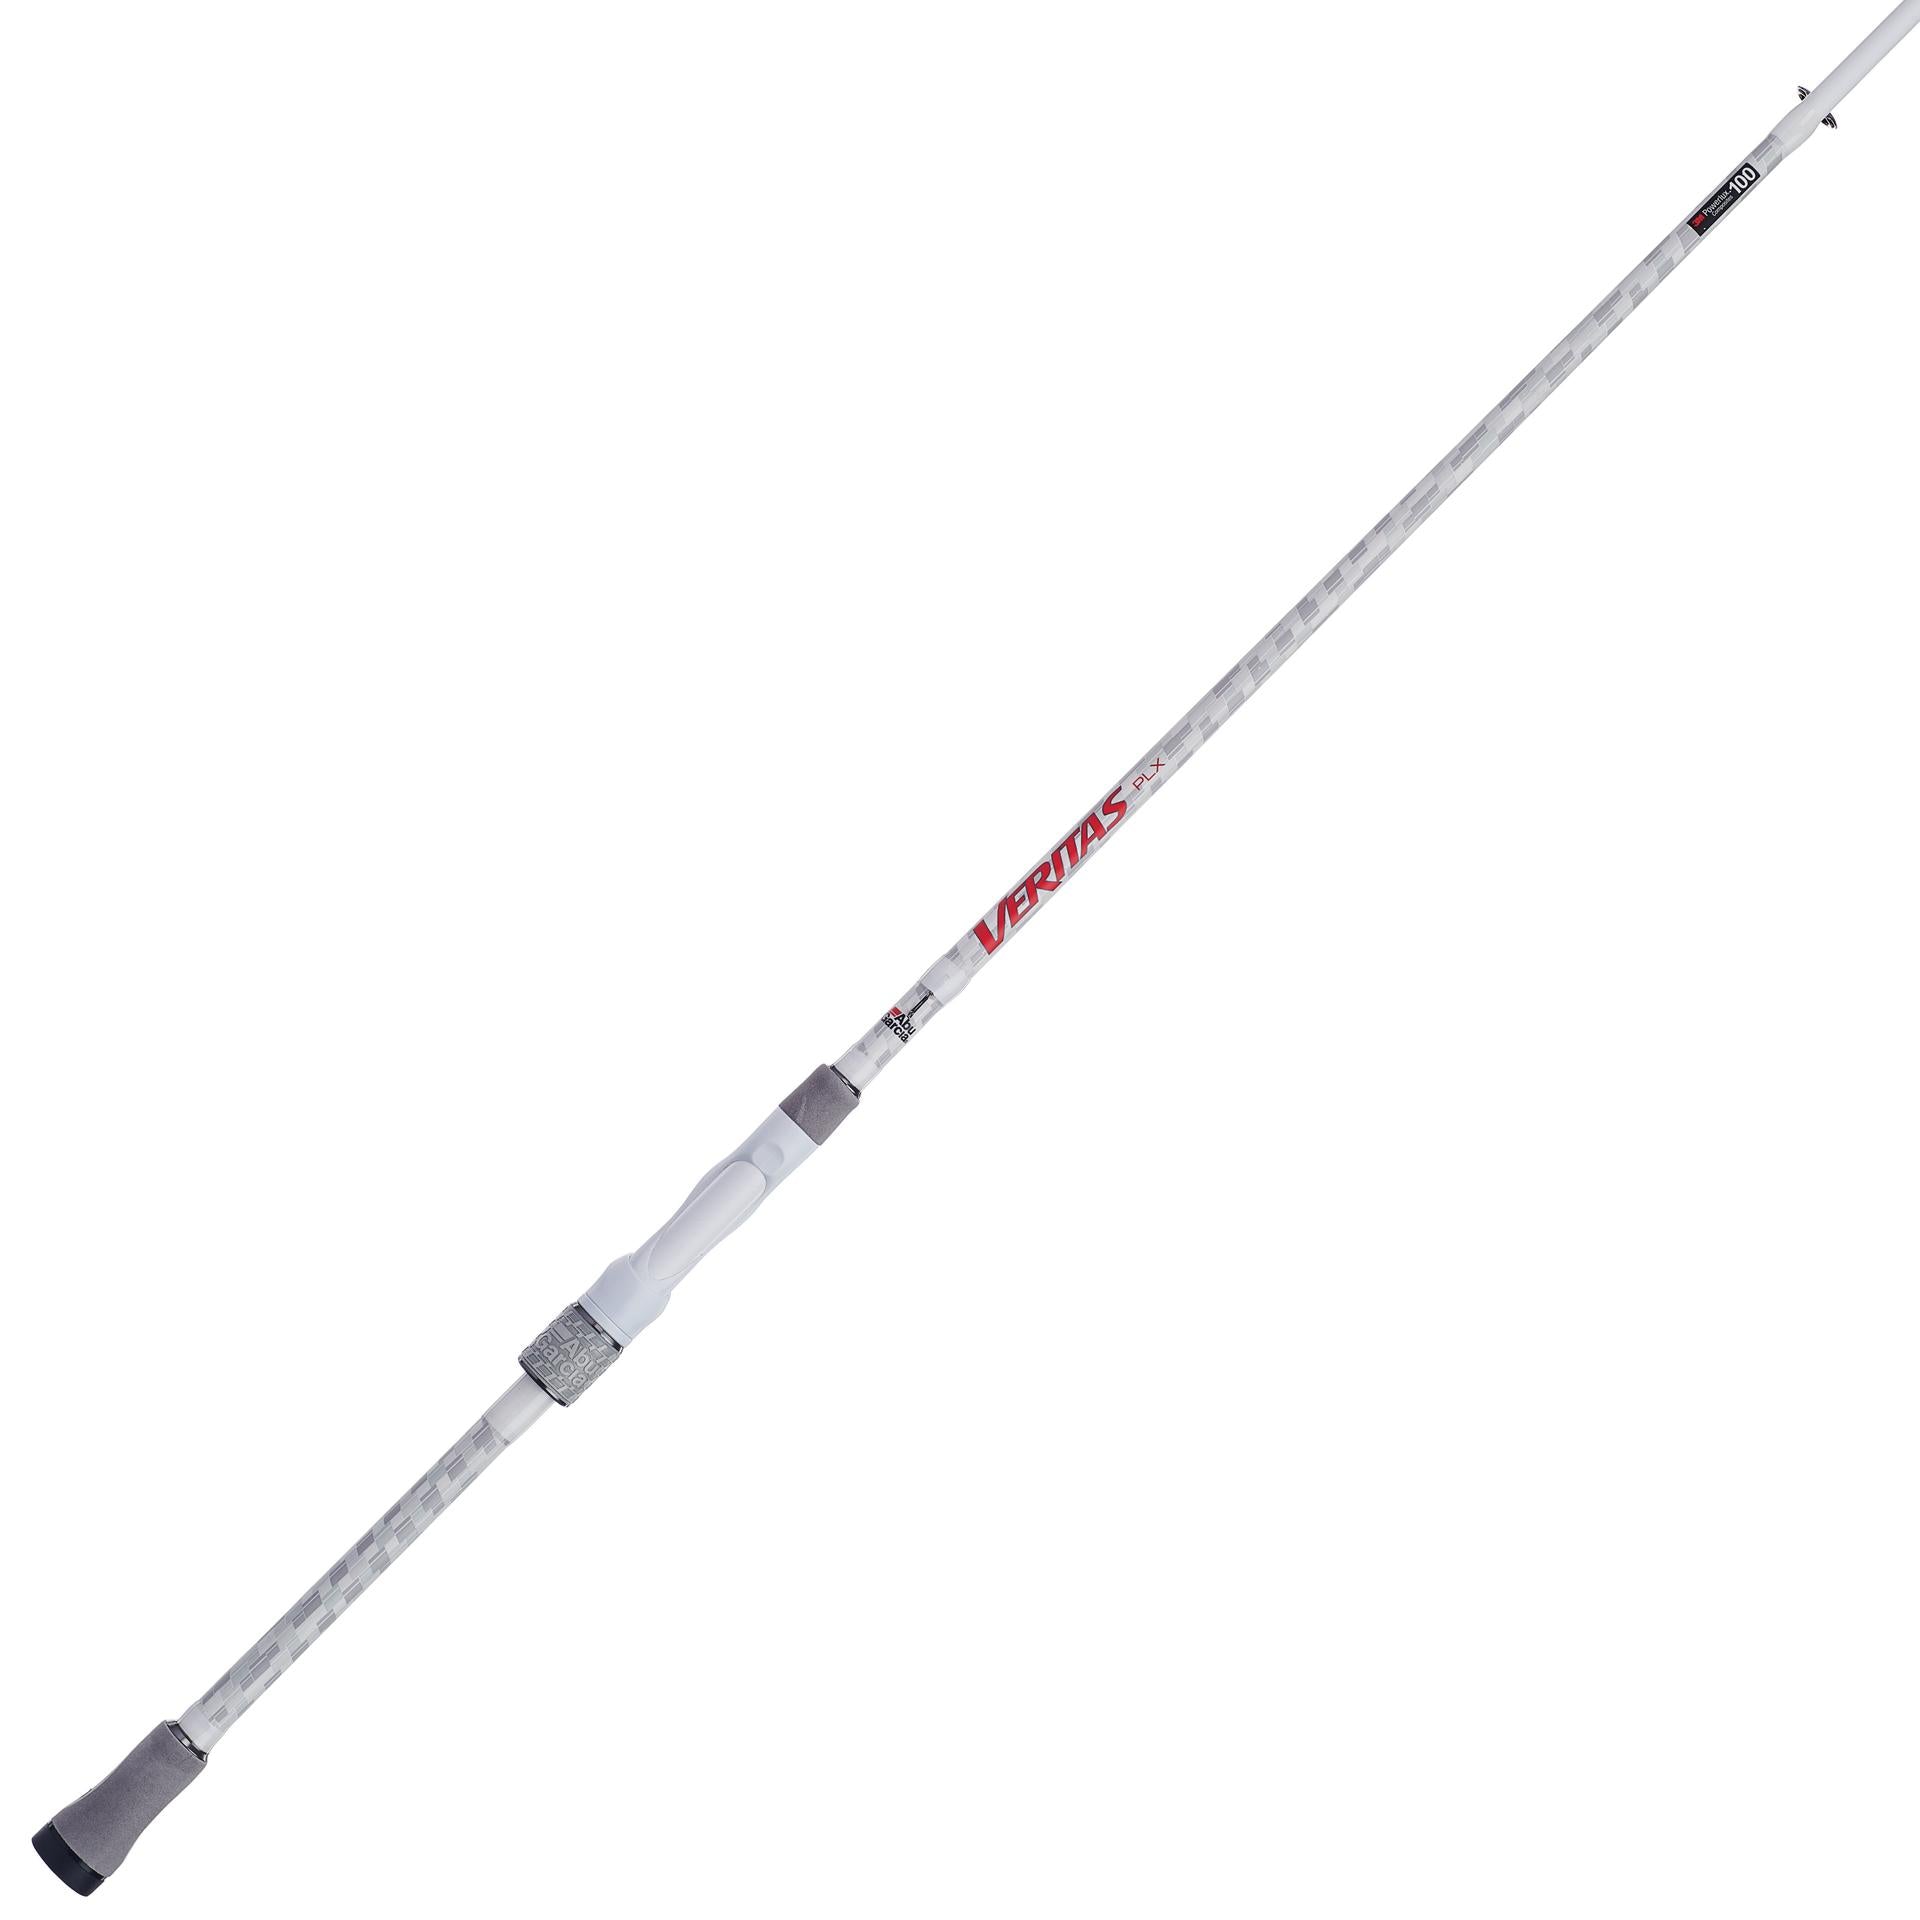 Veritas® LTD Spinning Rod | Abu Garcia®